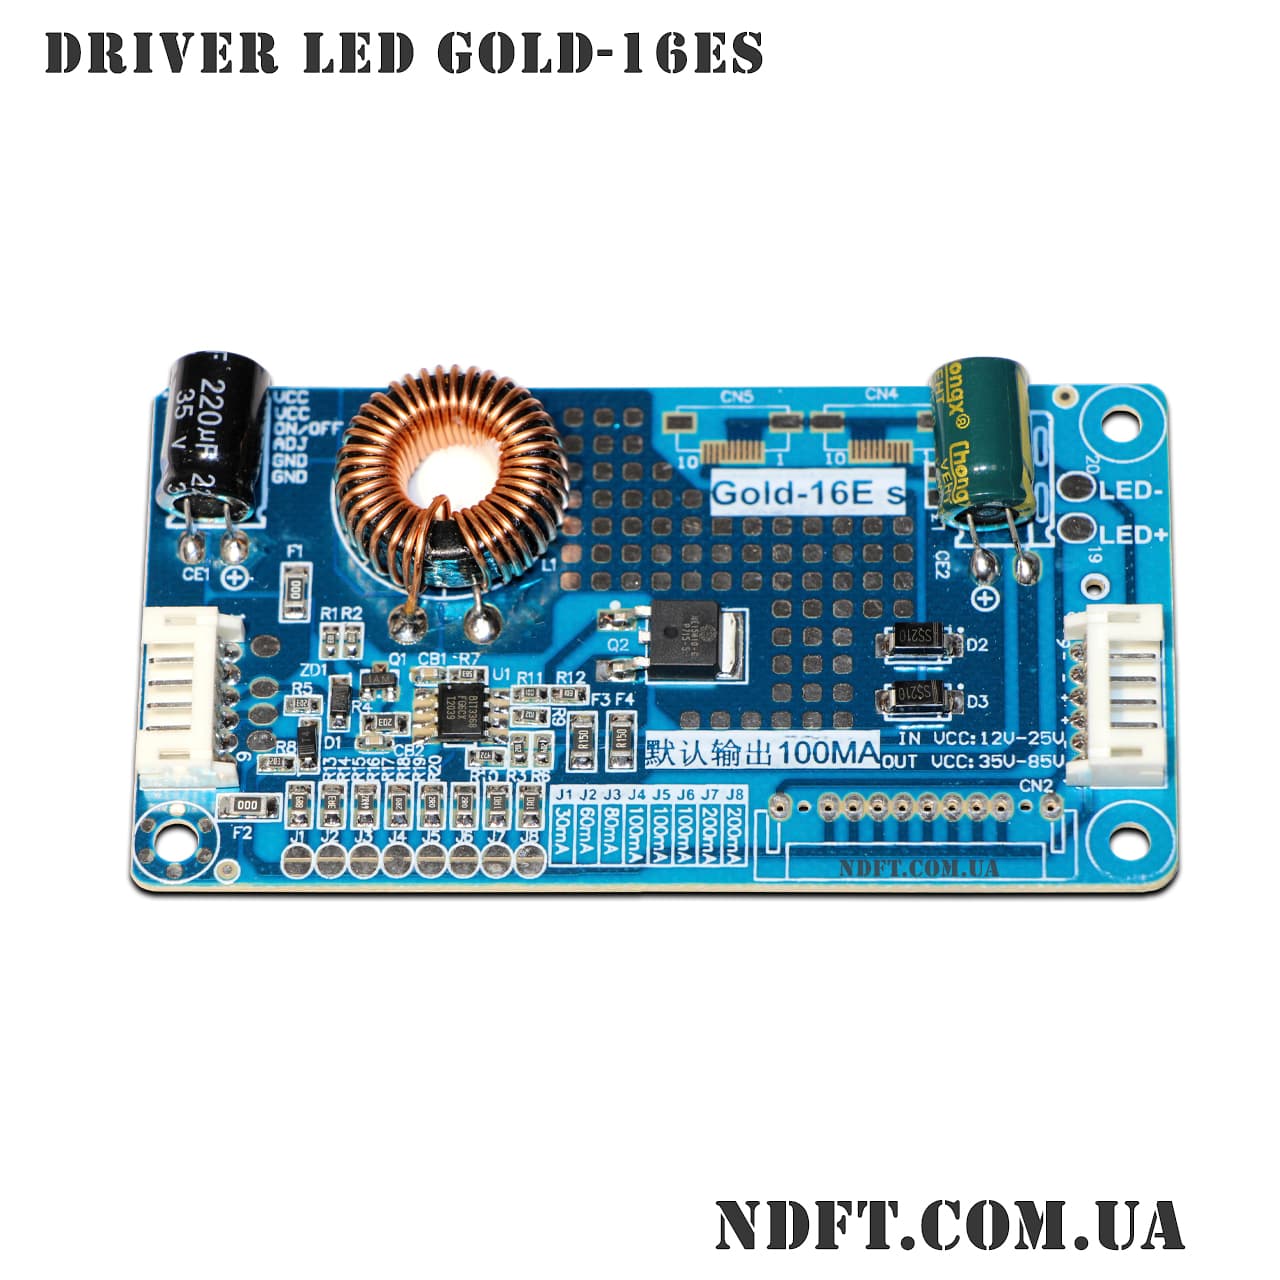 Gold-16ES (Gold-16E s, ZMKY01 V2.1) – Универсальный драйвер LED .